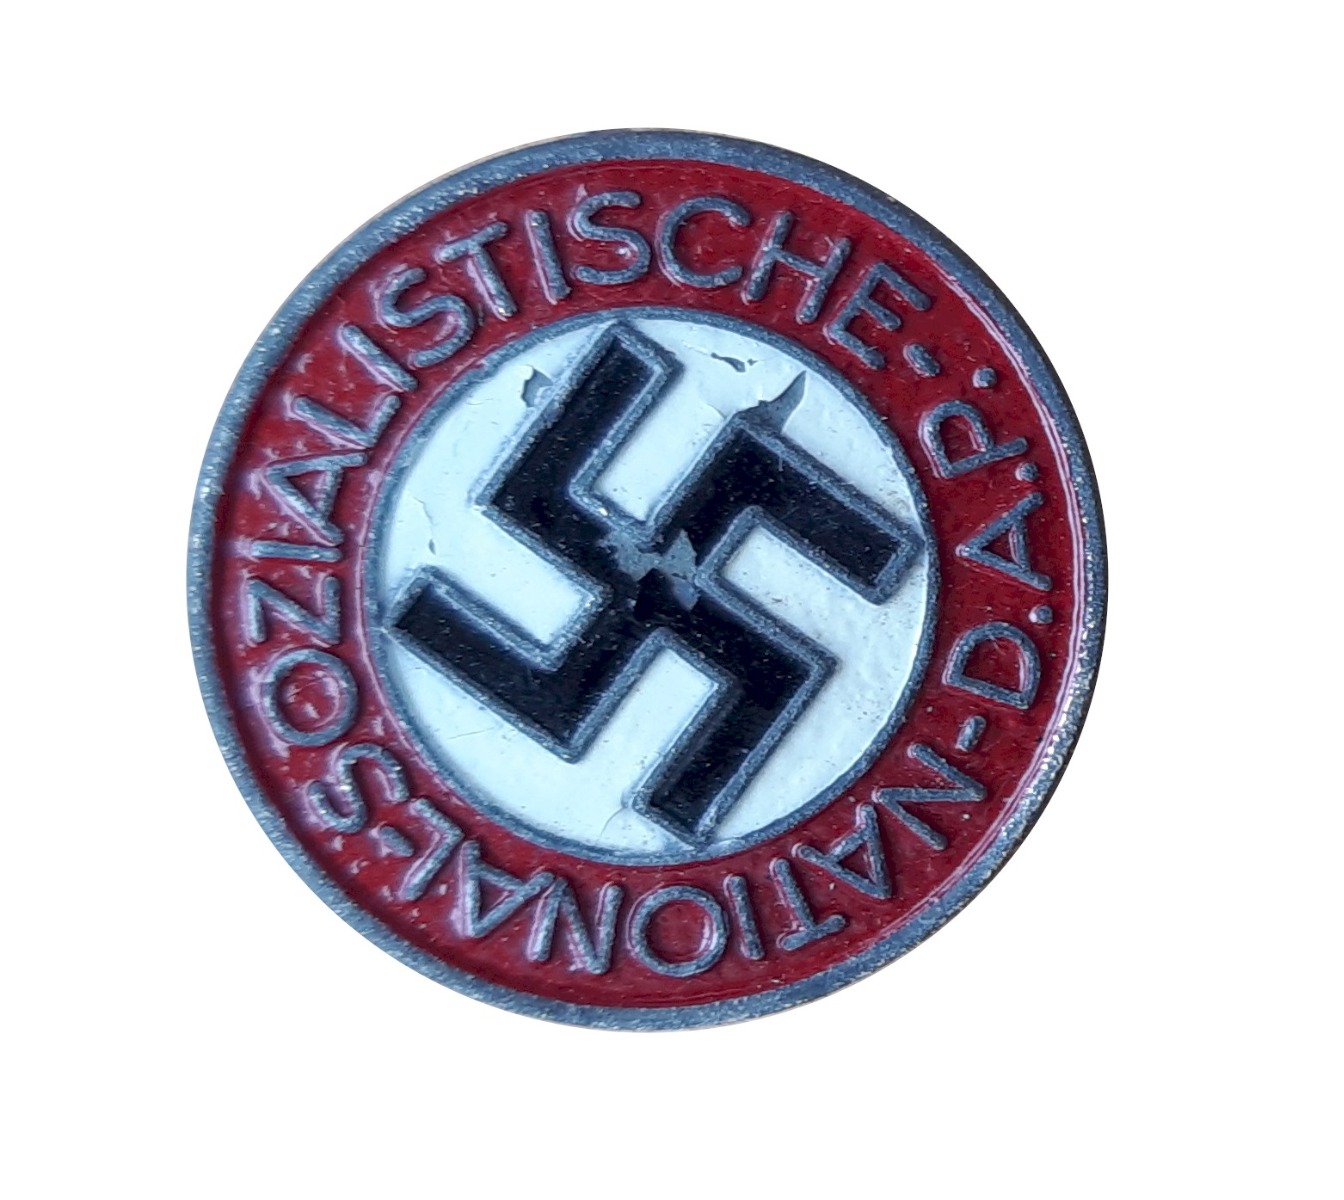 GERMAN NSDAP MEMBERSHIP PARTY BADGE MAKER MARKED M1-128